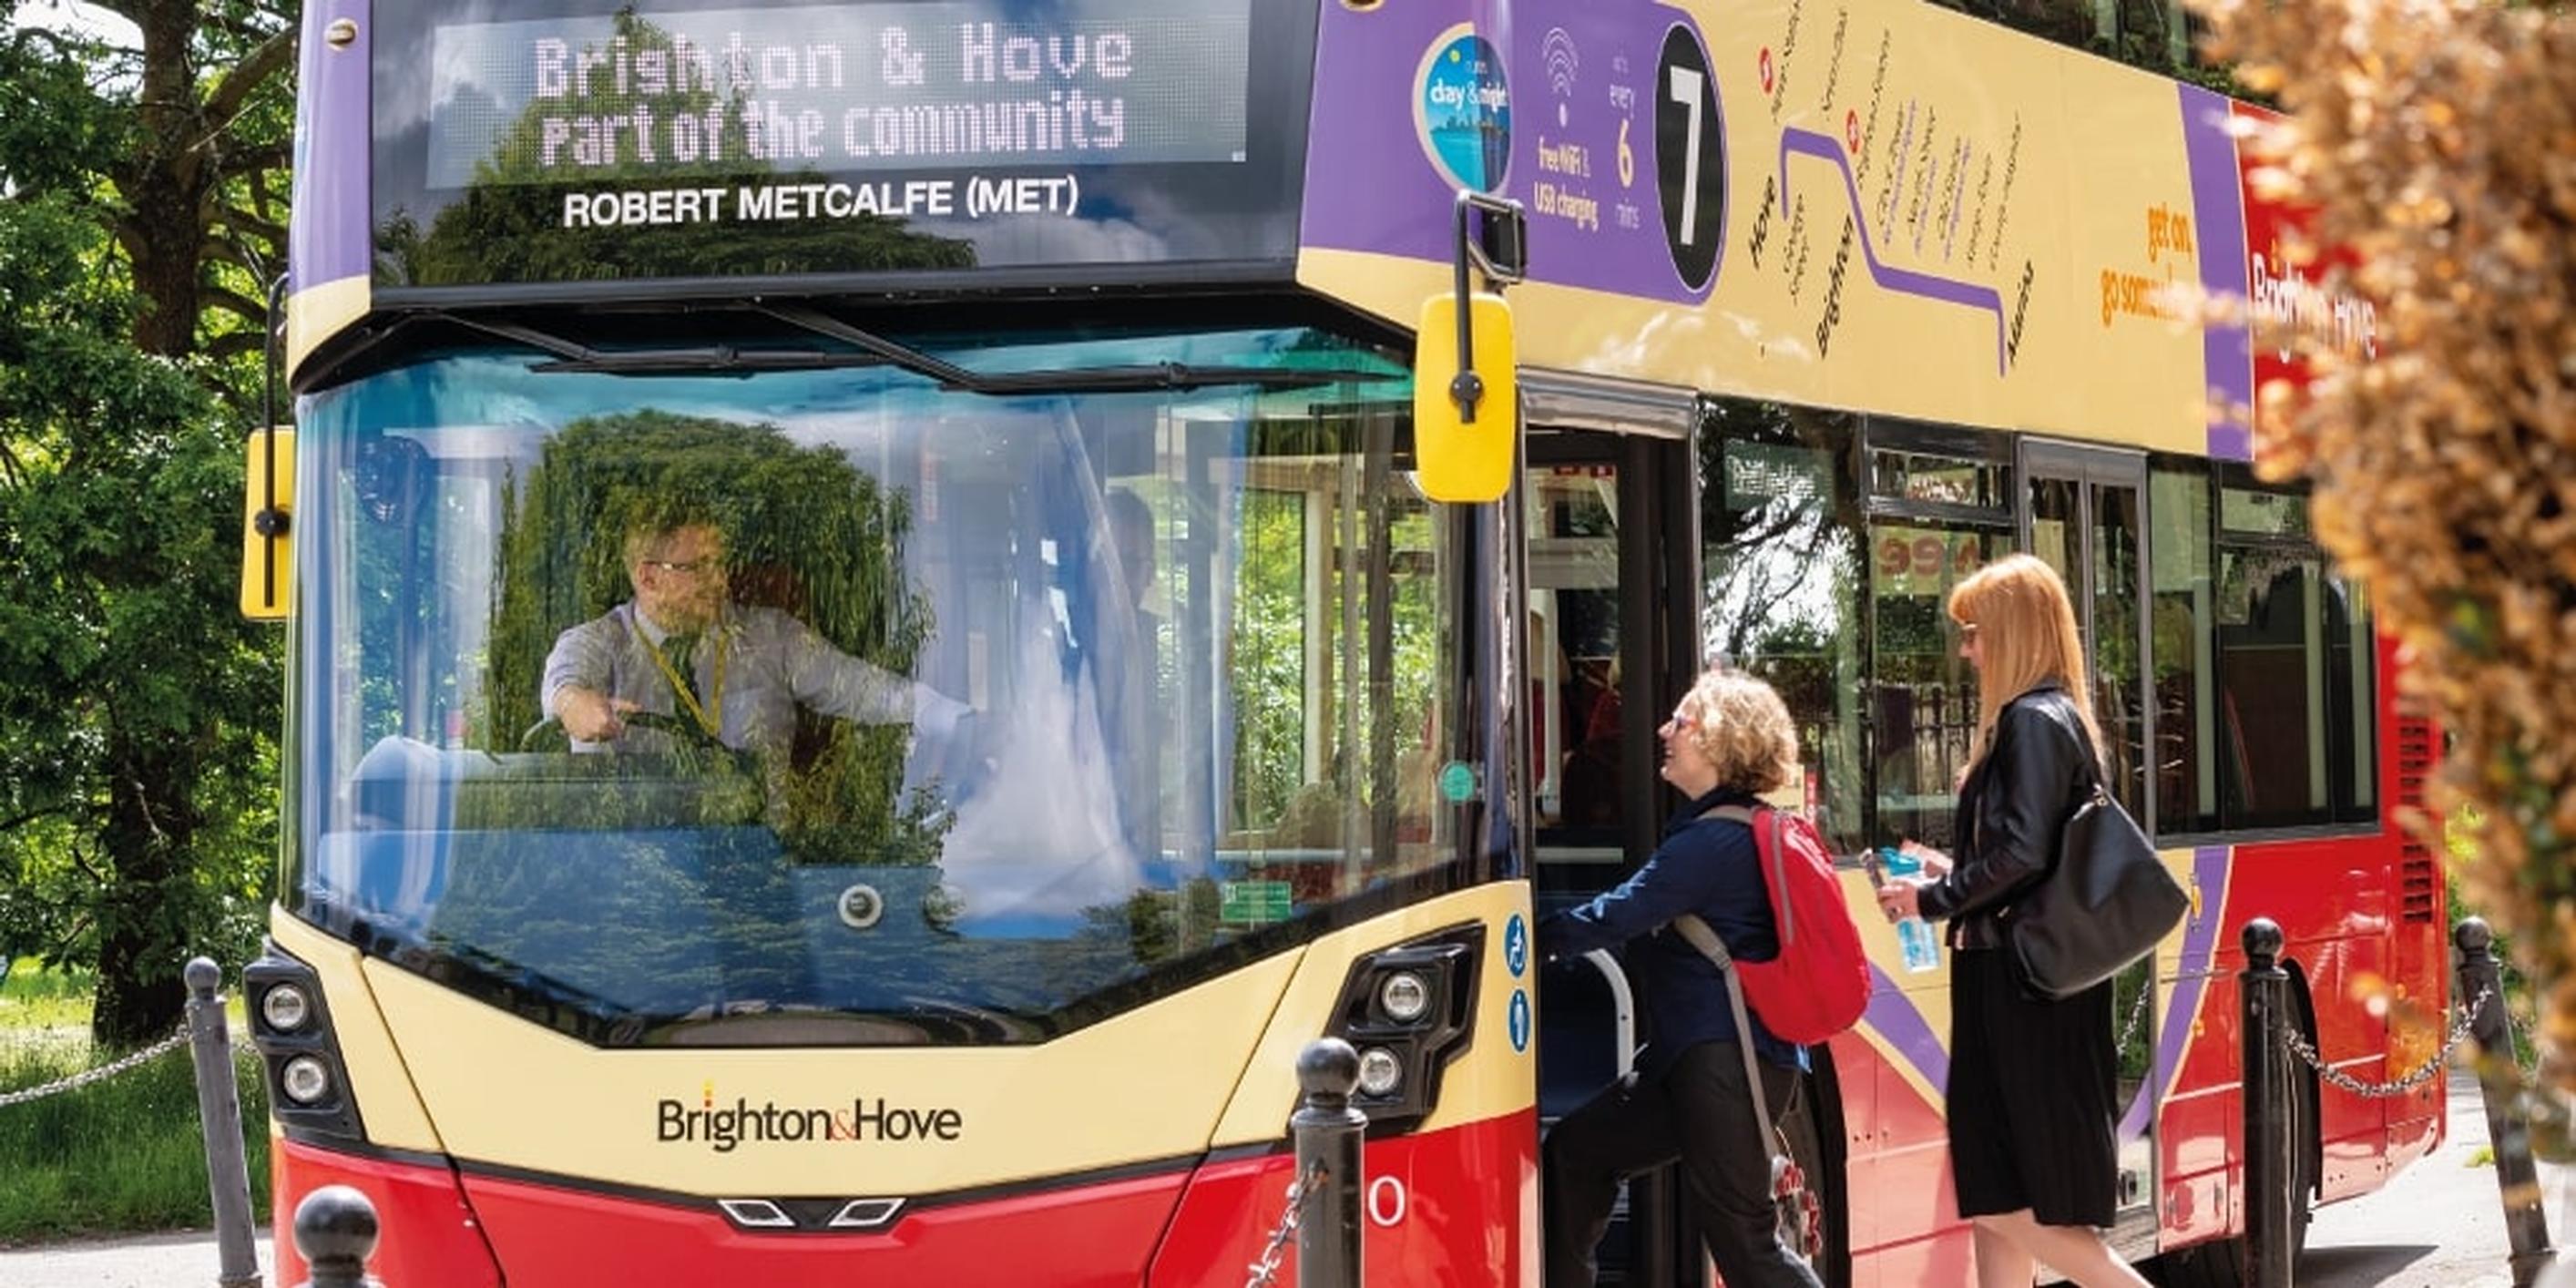 A Brighton & Hove bus